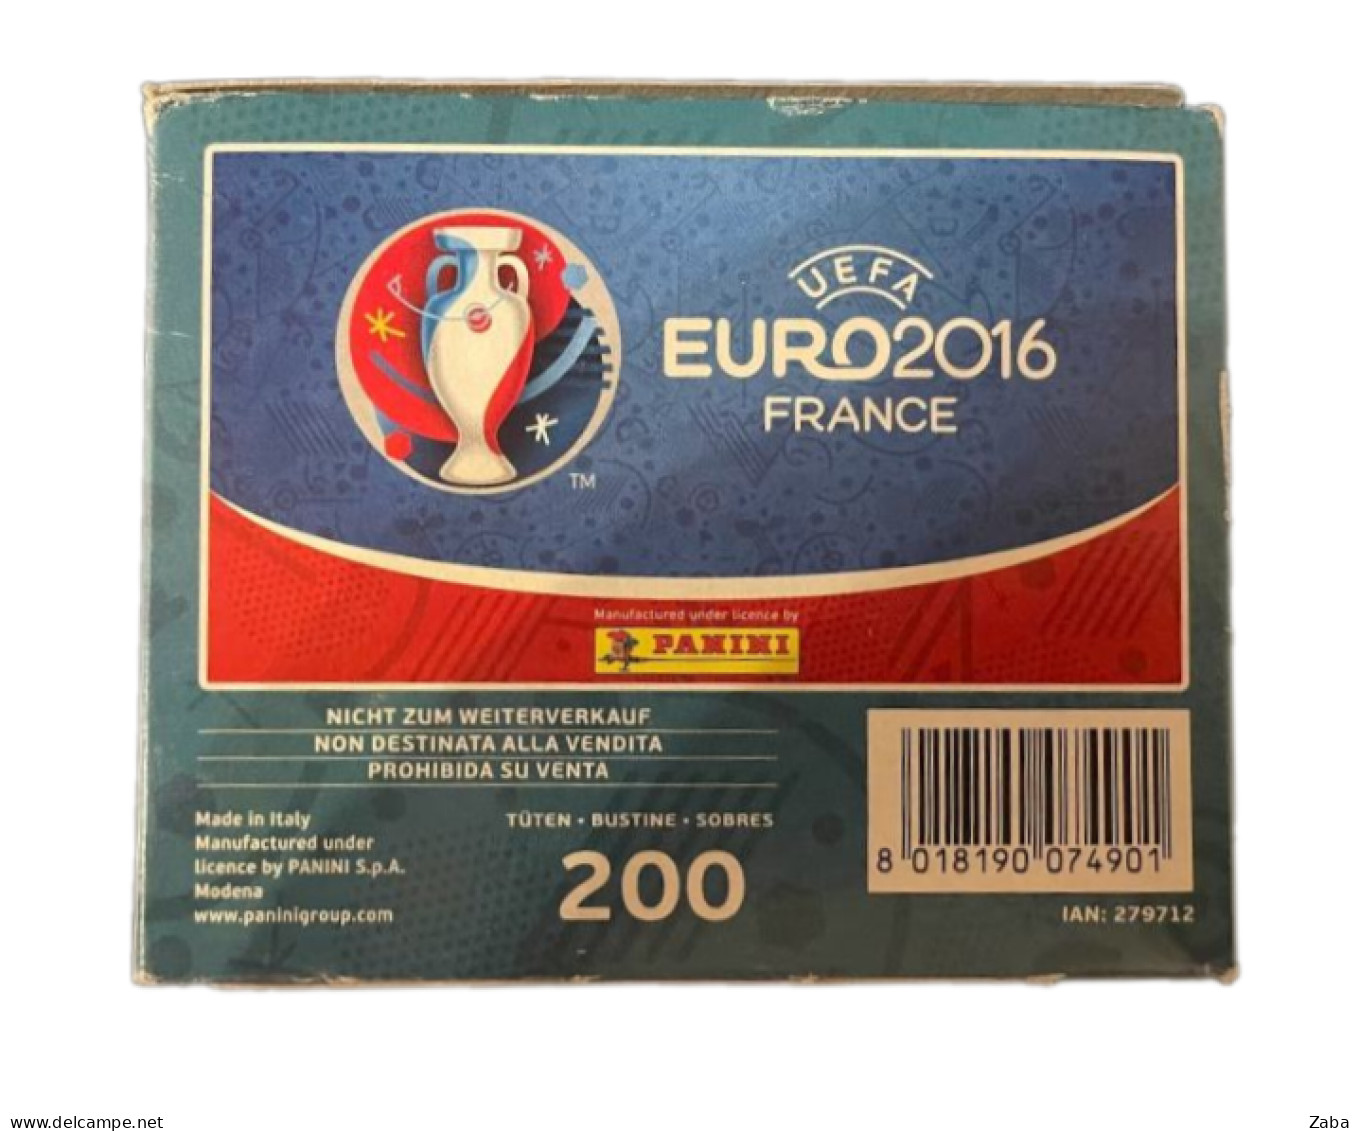 Panini EURO 2016 Lidl Box, 200 Packets, Not Opened! - Italian Edition